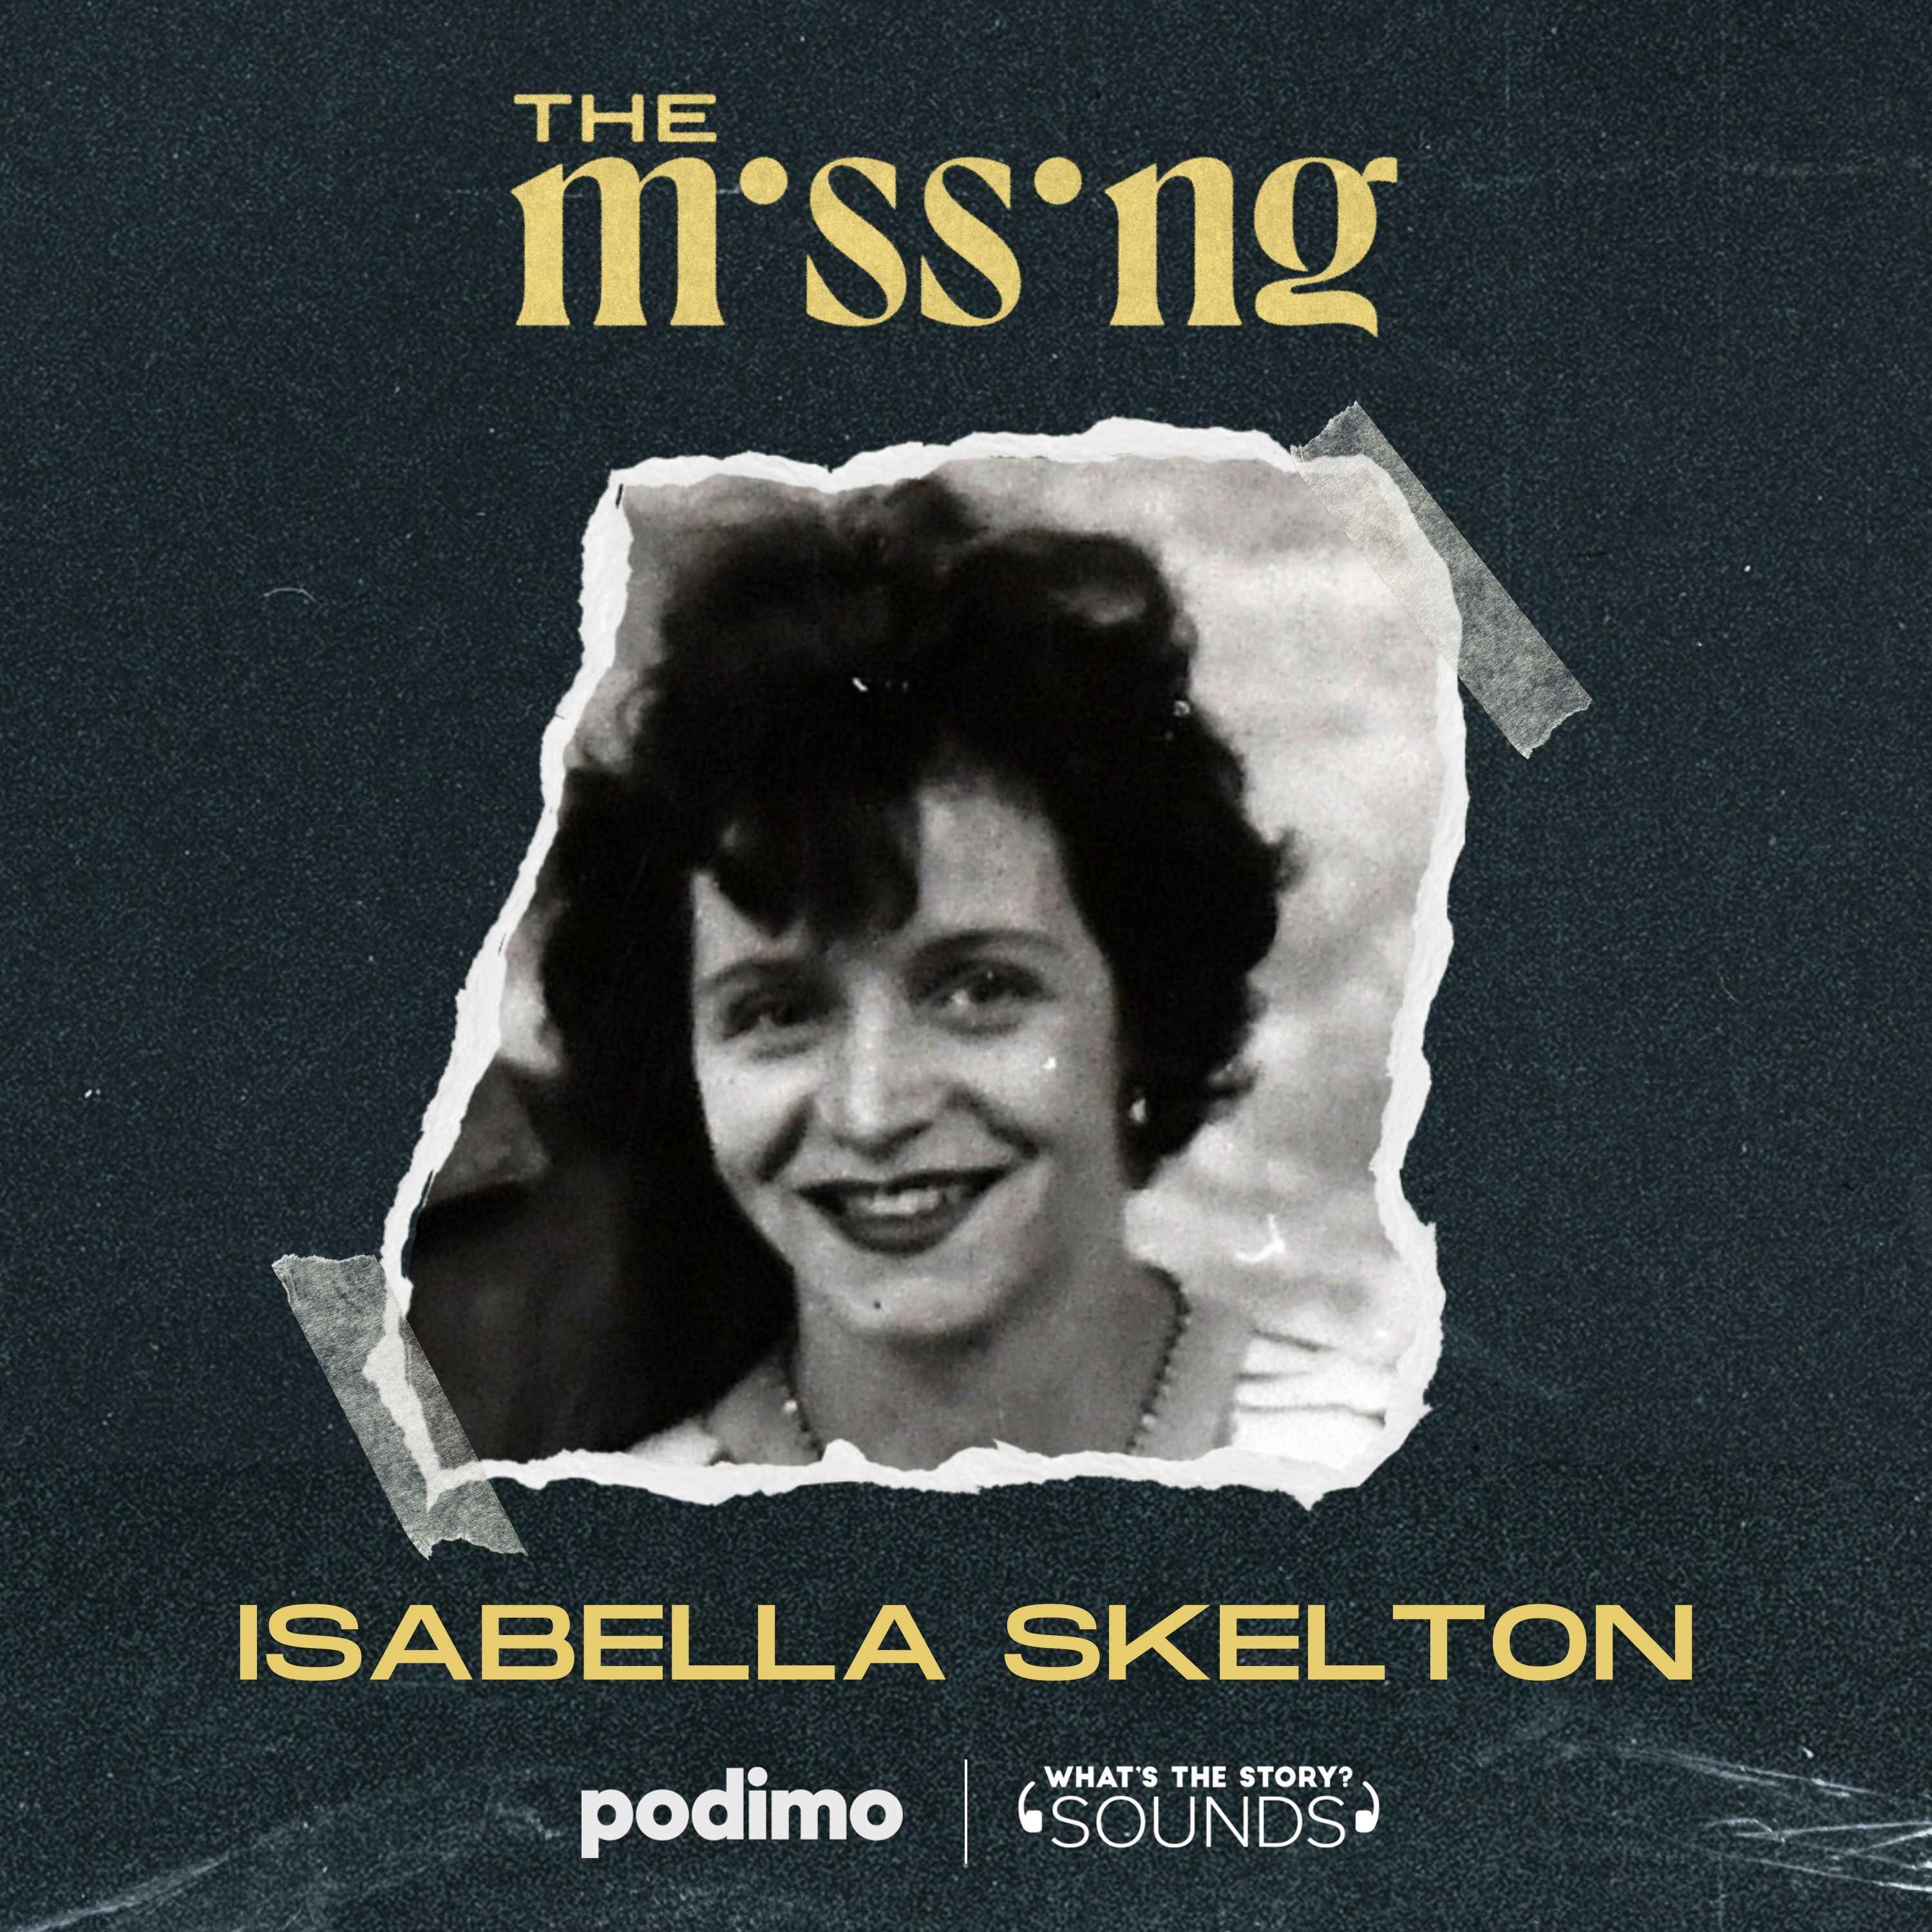 Isabella Skelton